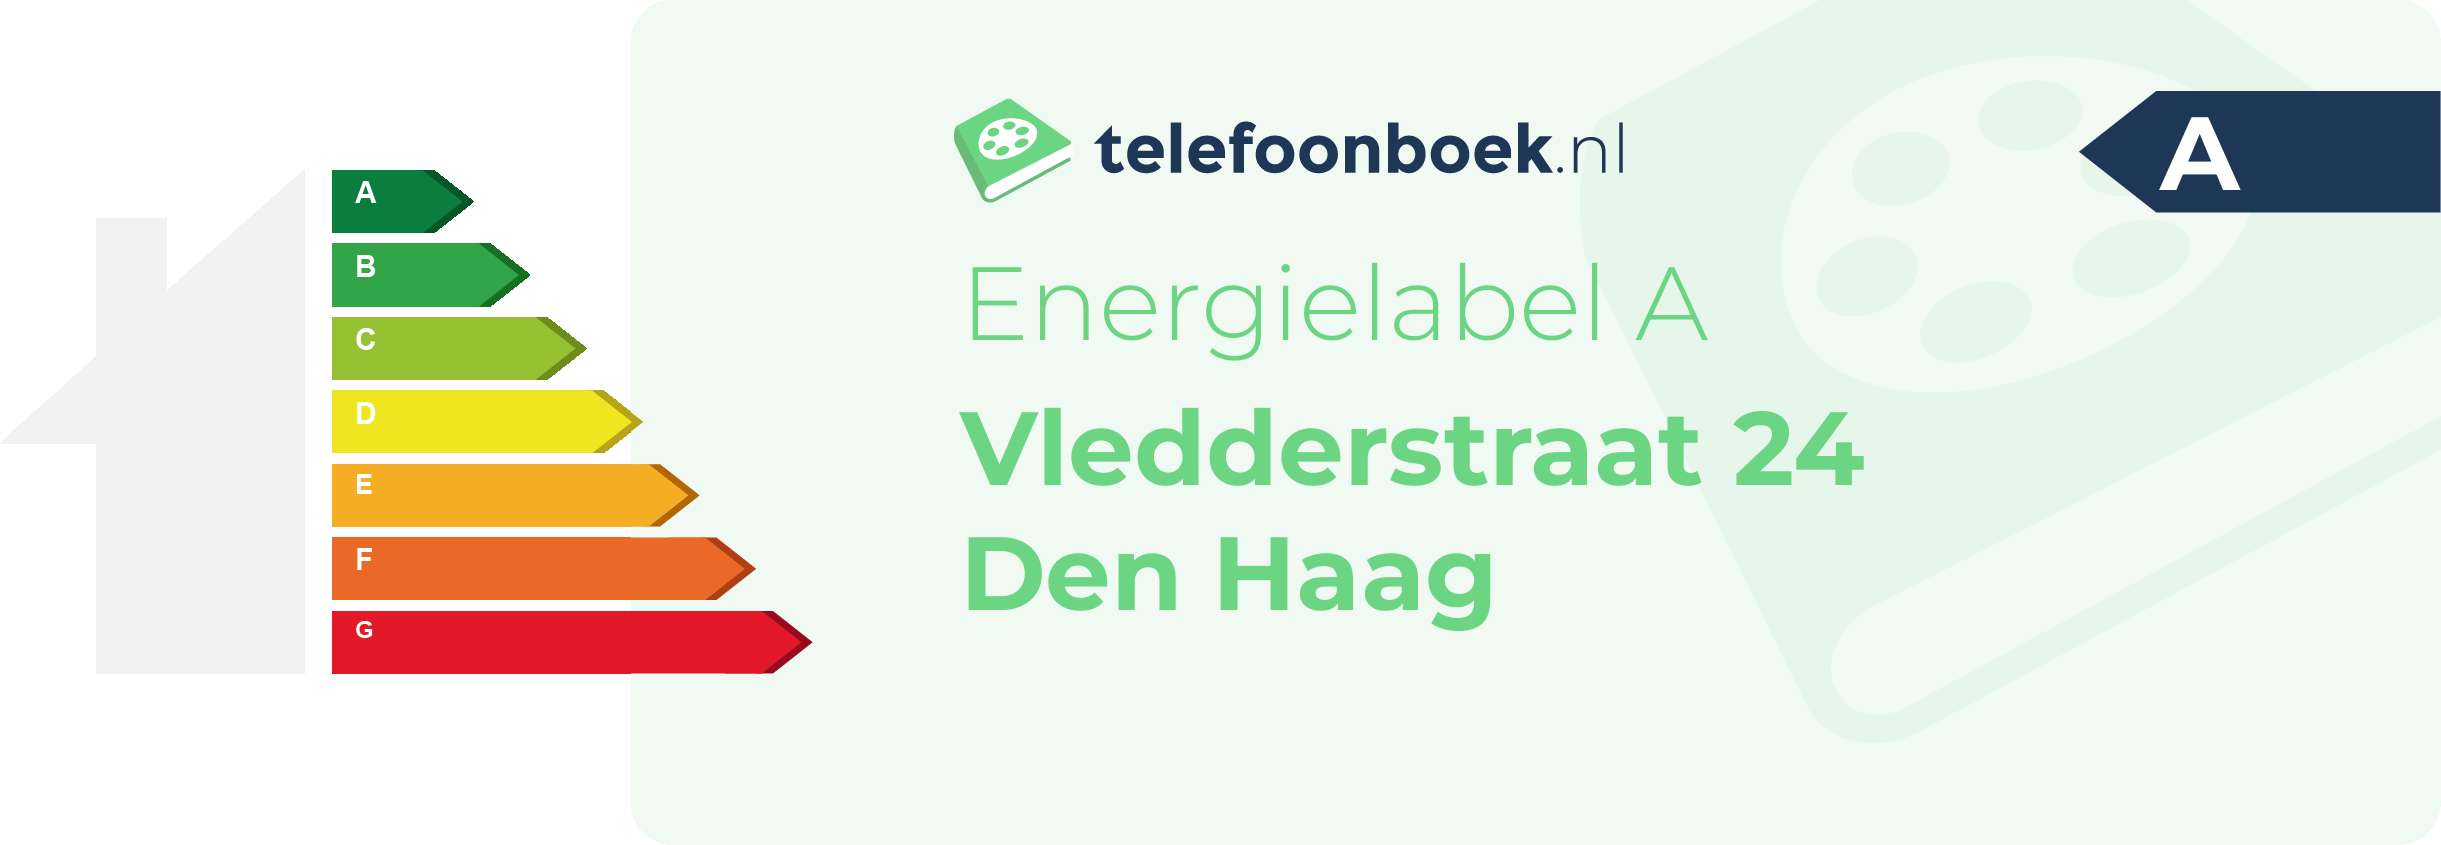 Energielabel Vledderstraat 24 Den Haag